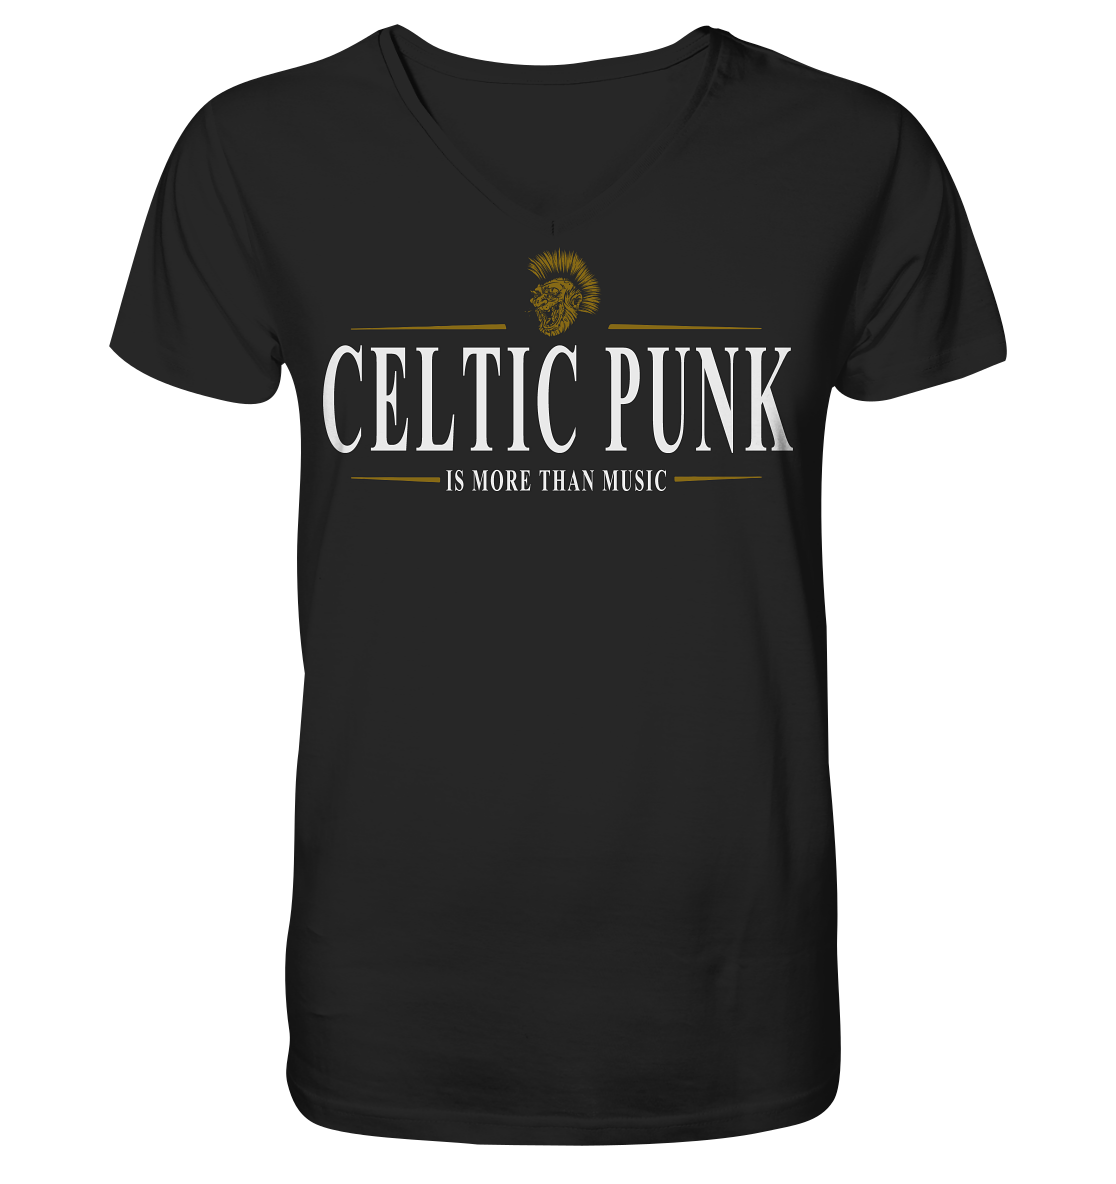 Celtic Punk "Is More Than Music" - V-Neck Shirt